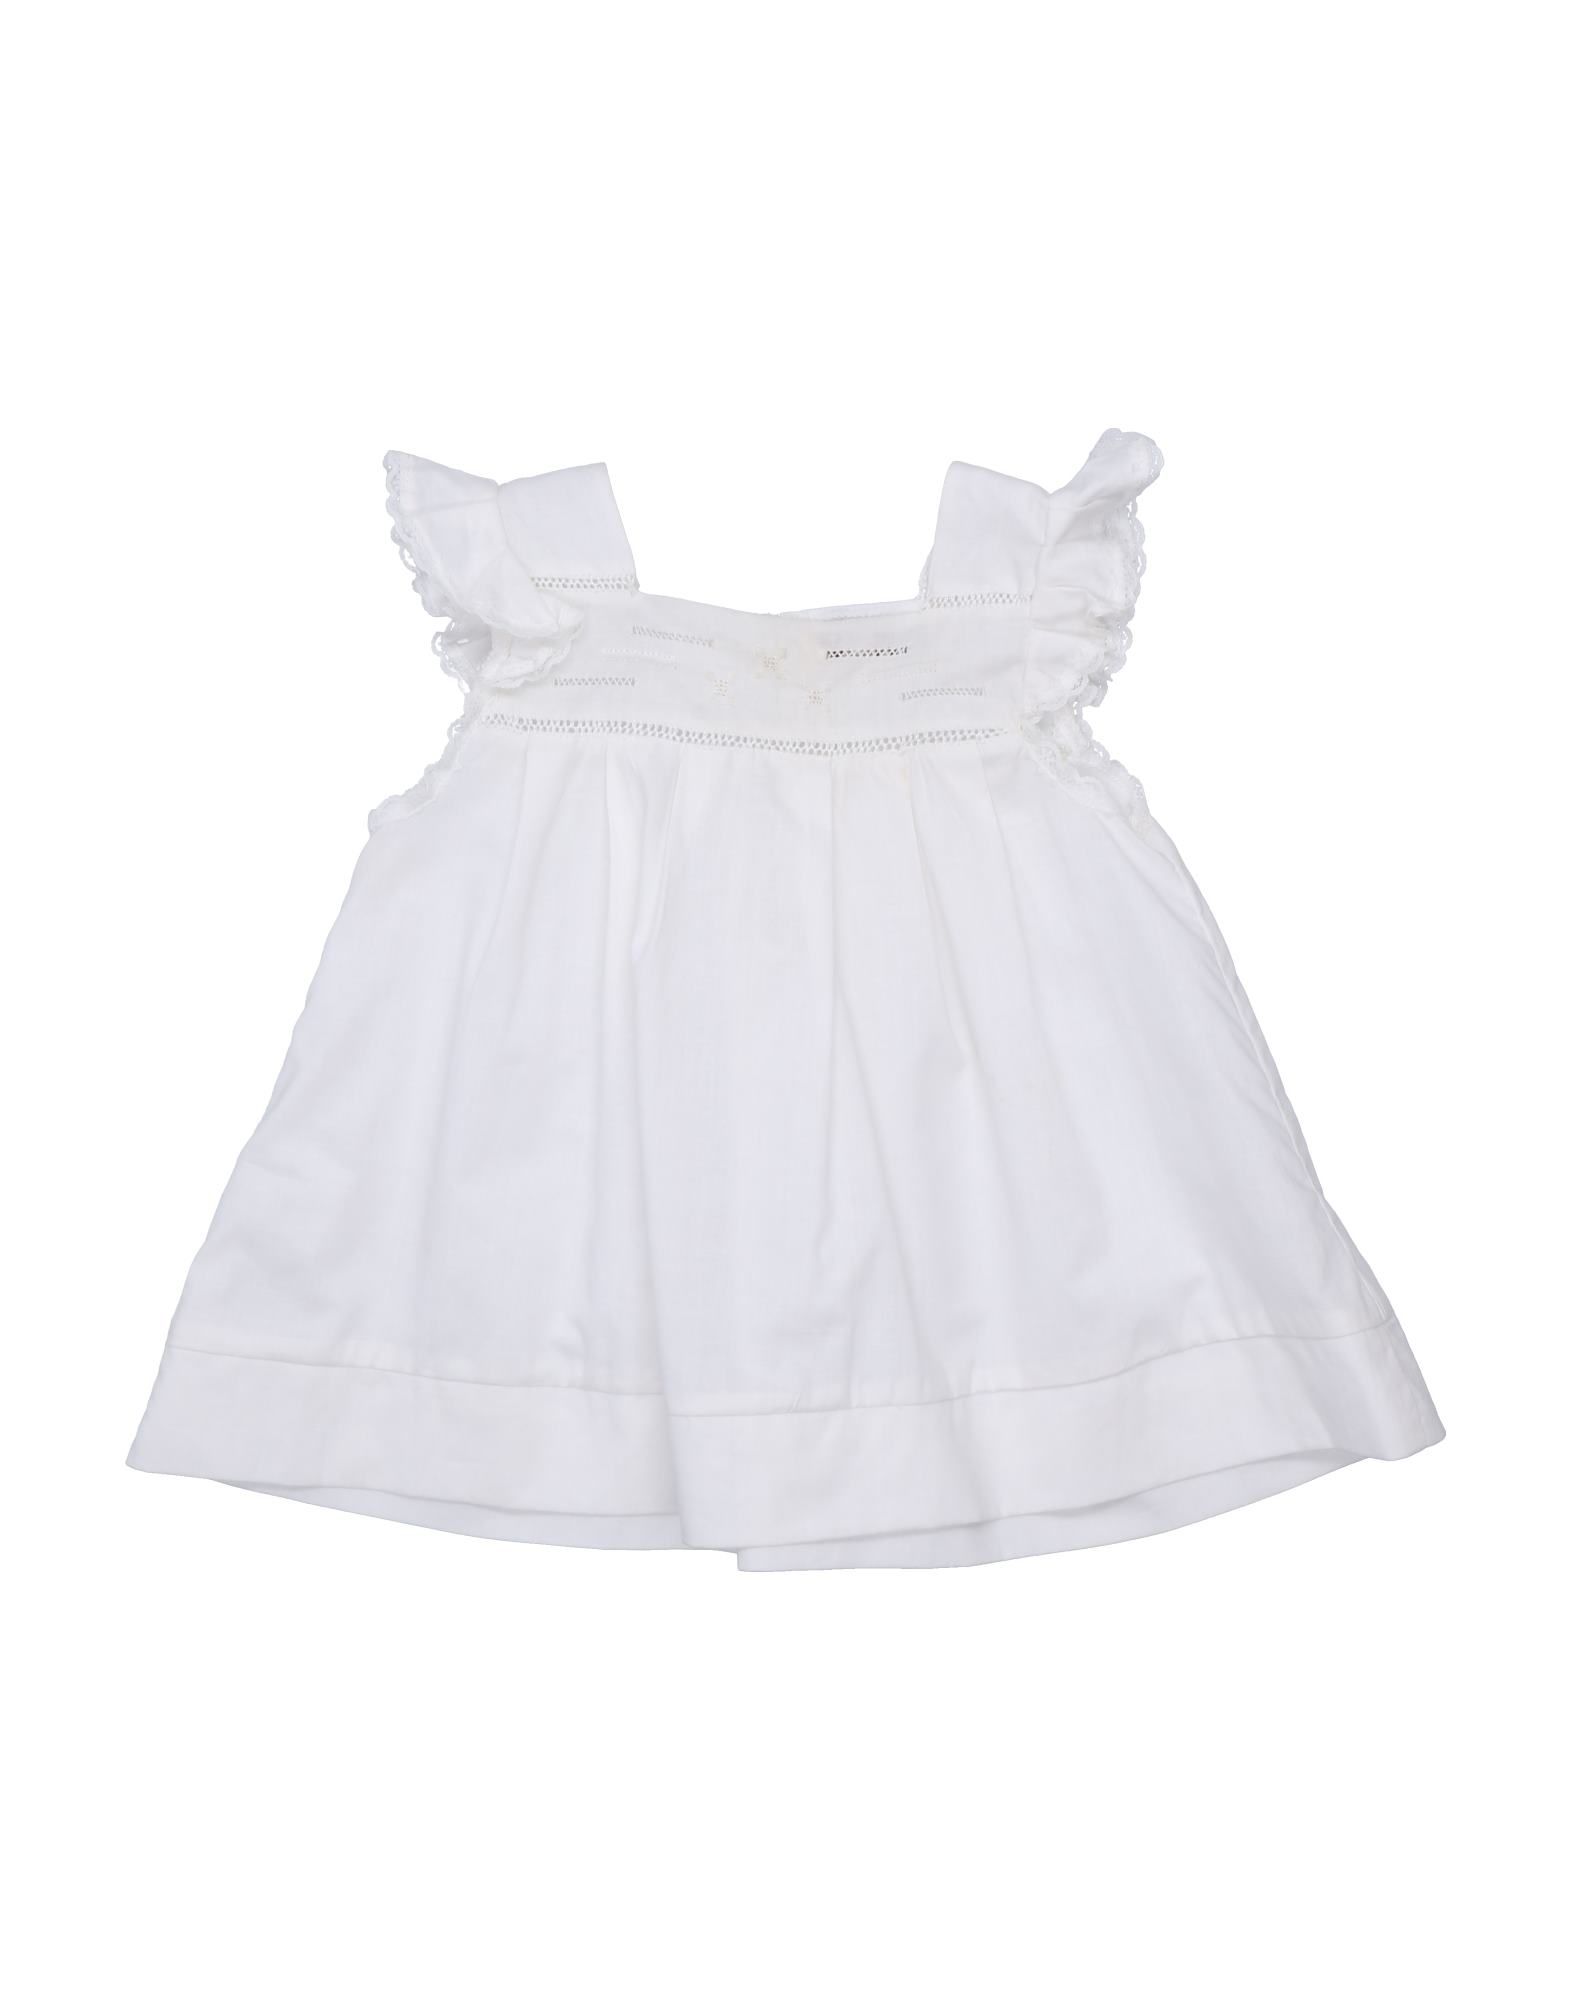 Noro Kids' Dresses In White